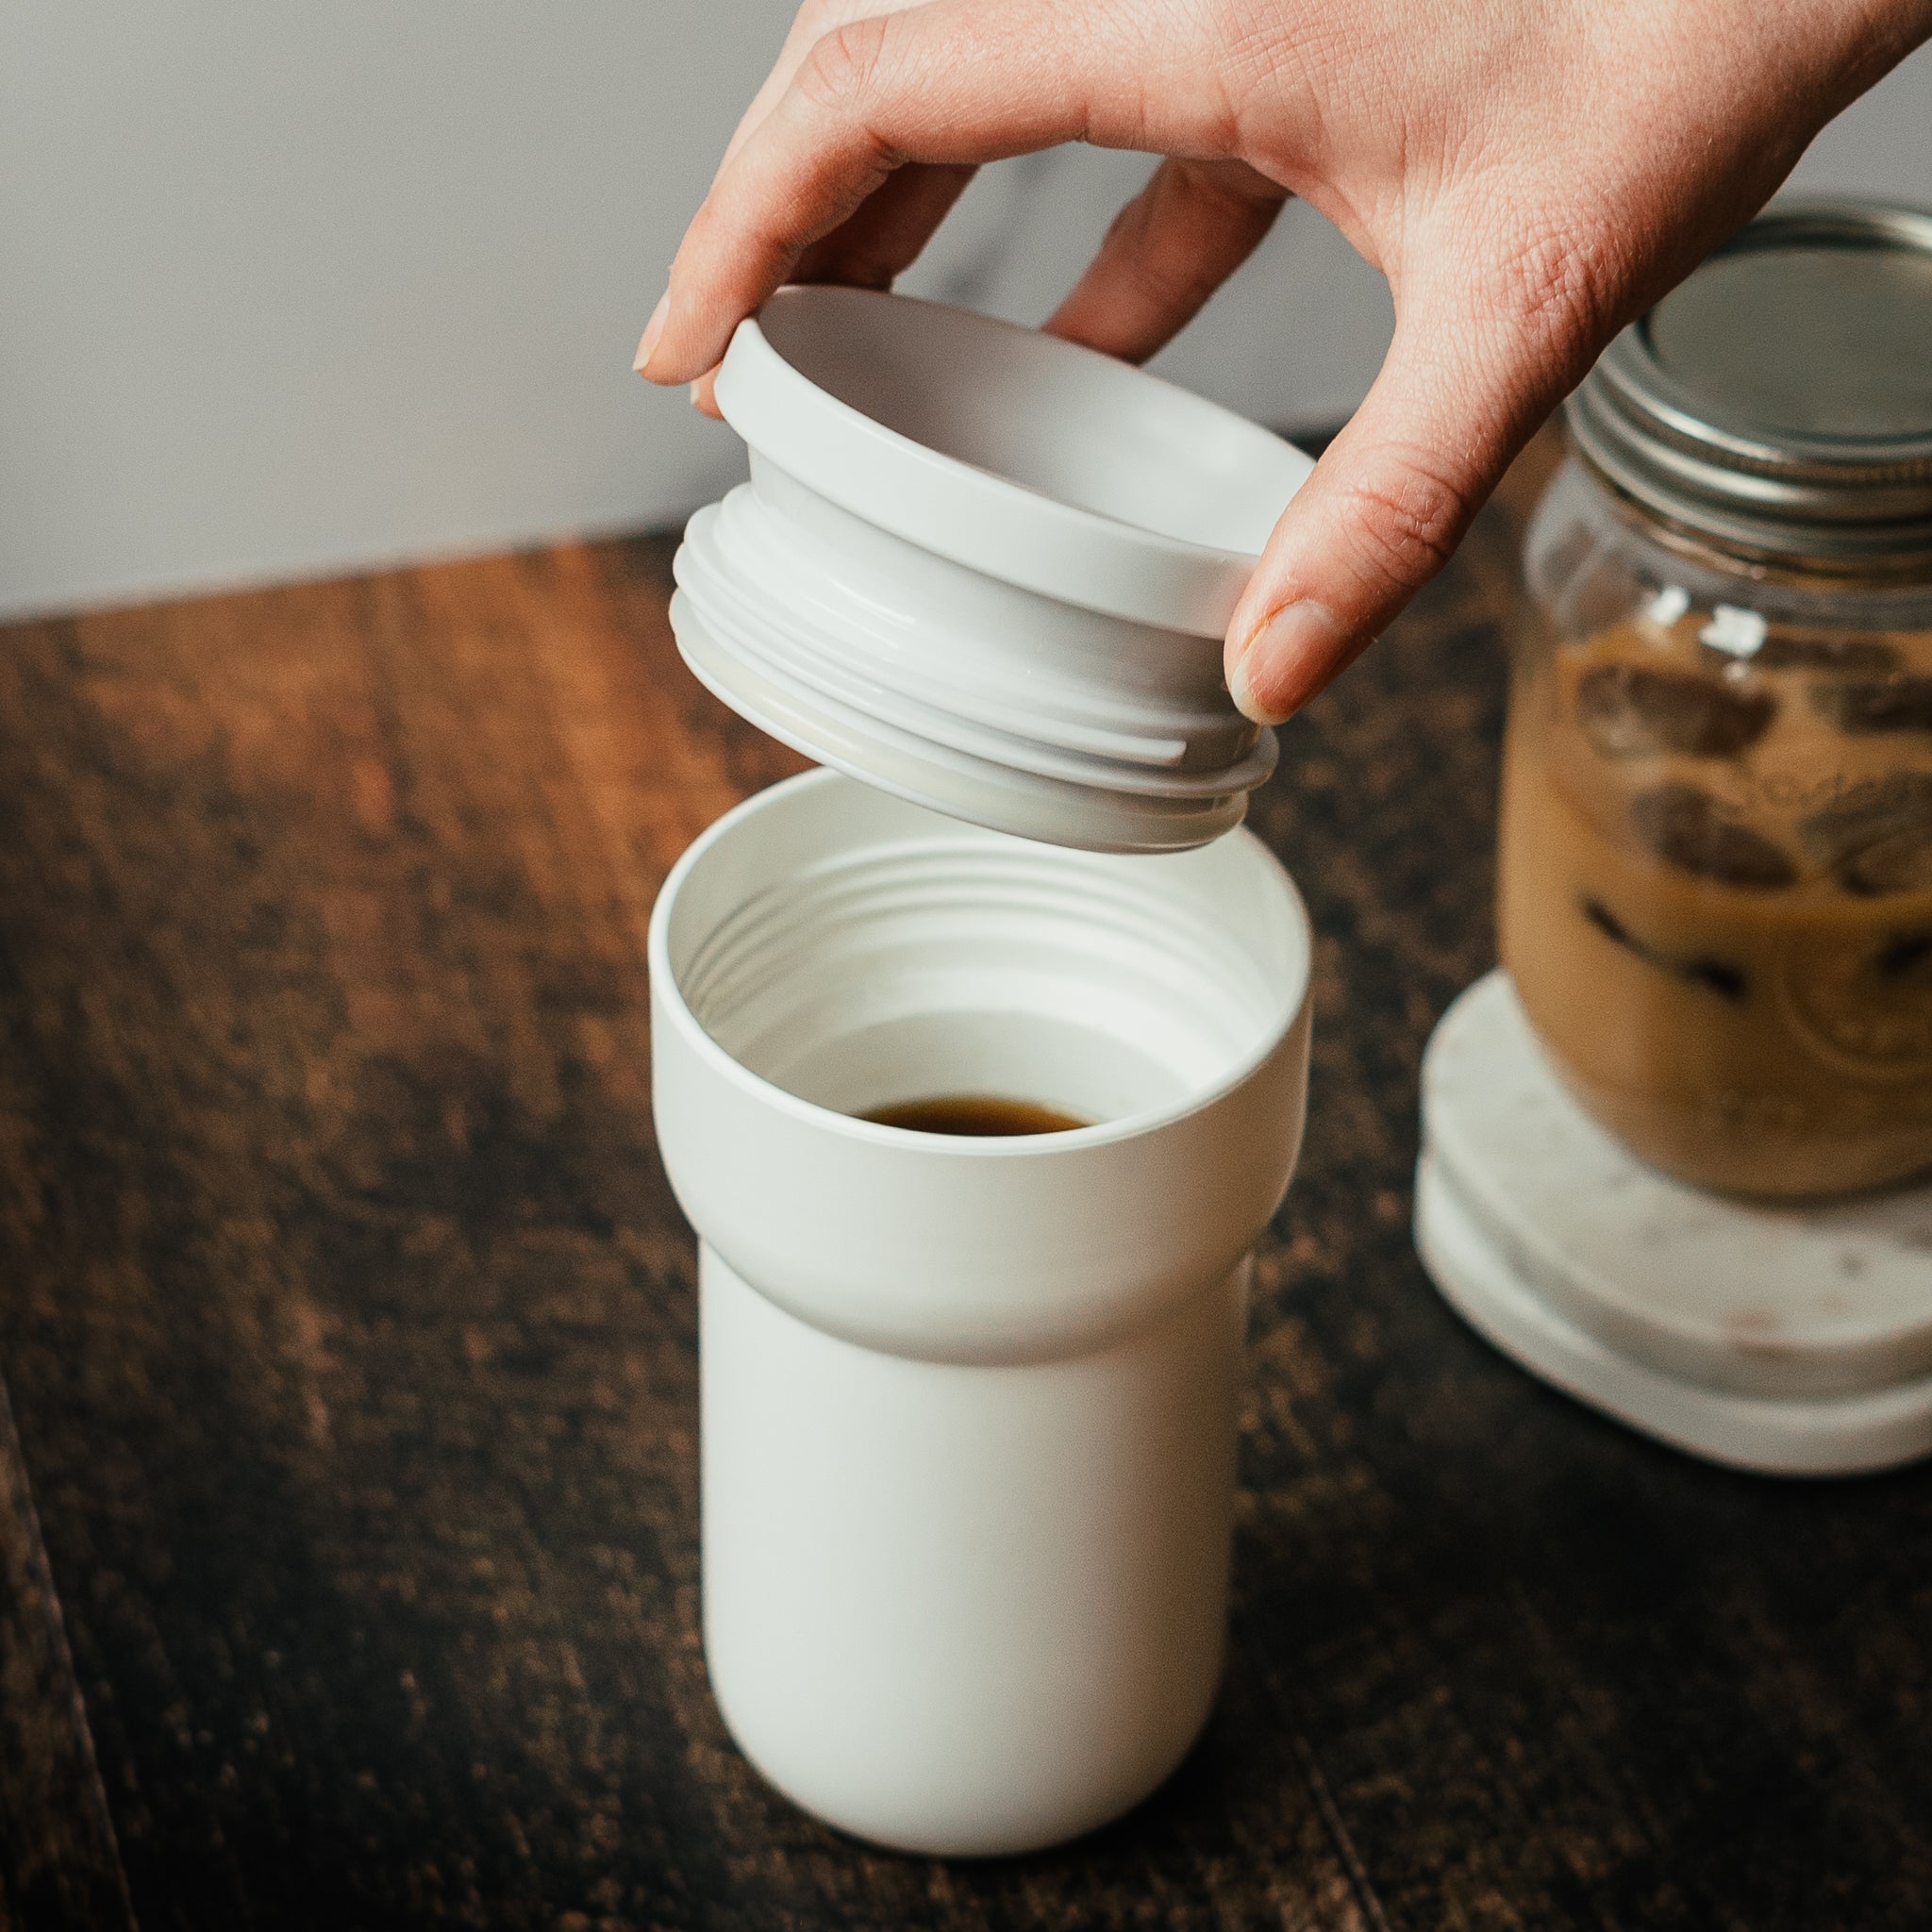 Putting a lid on a travel coffee mug